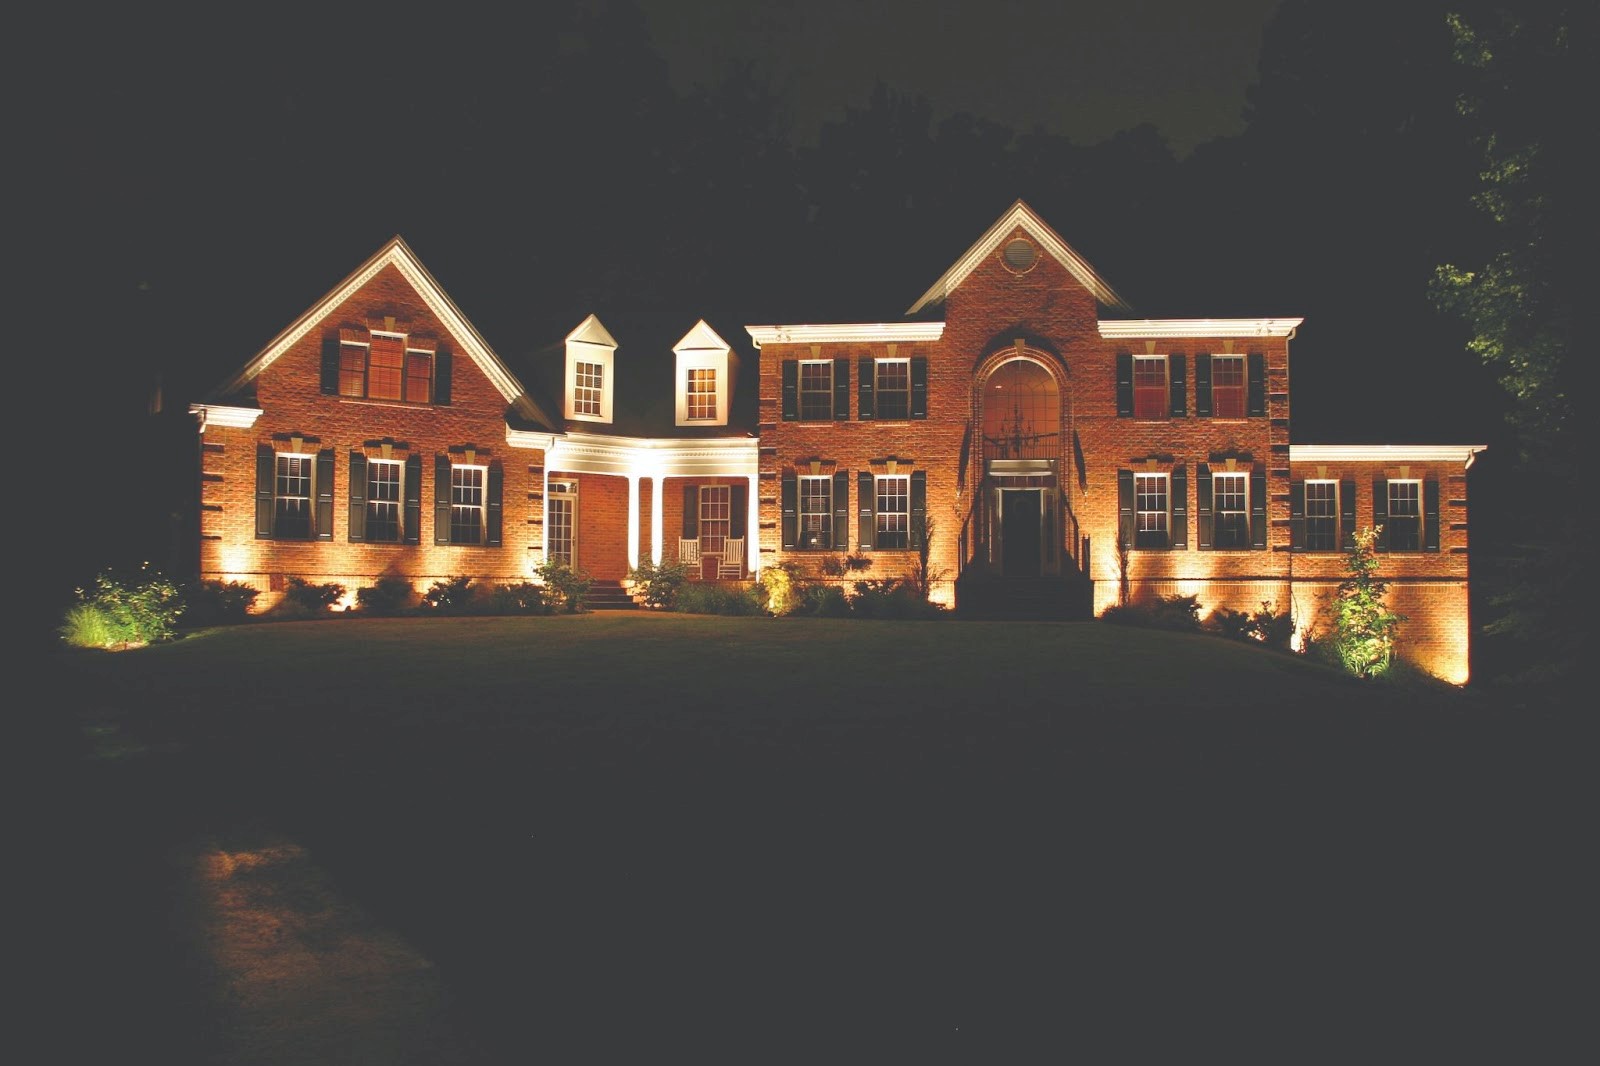 Outdoor Lighting Use To Illuminate Home Facade